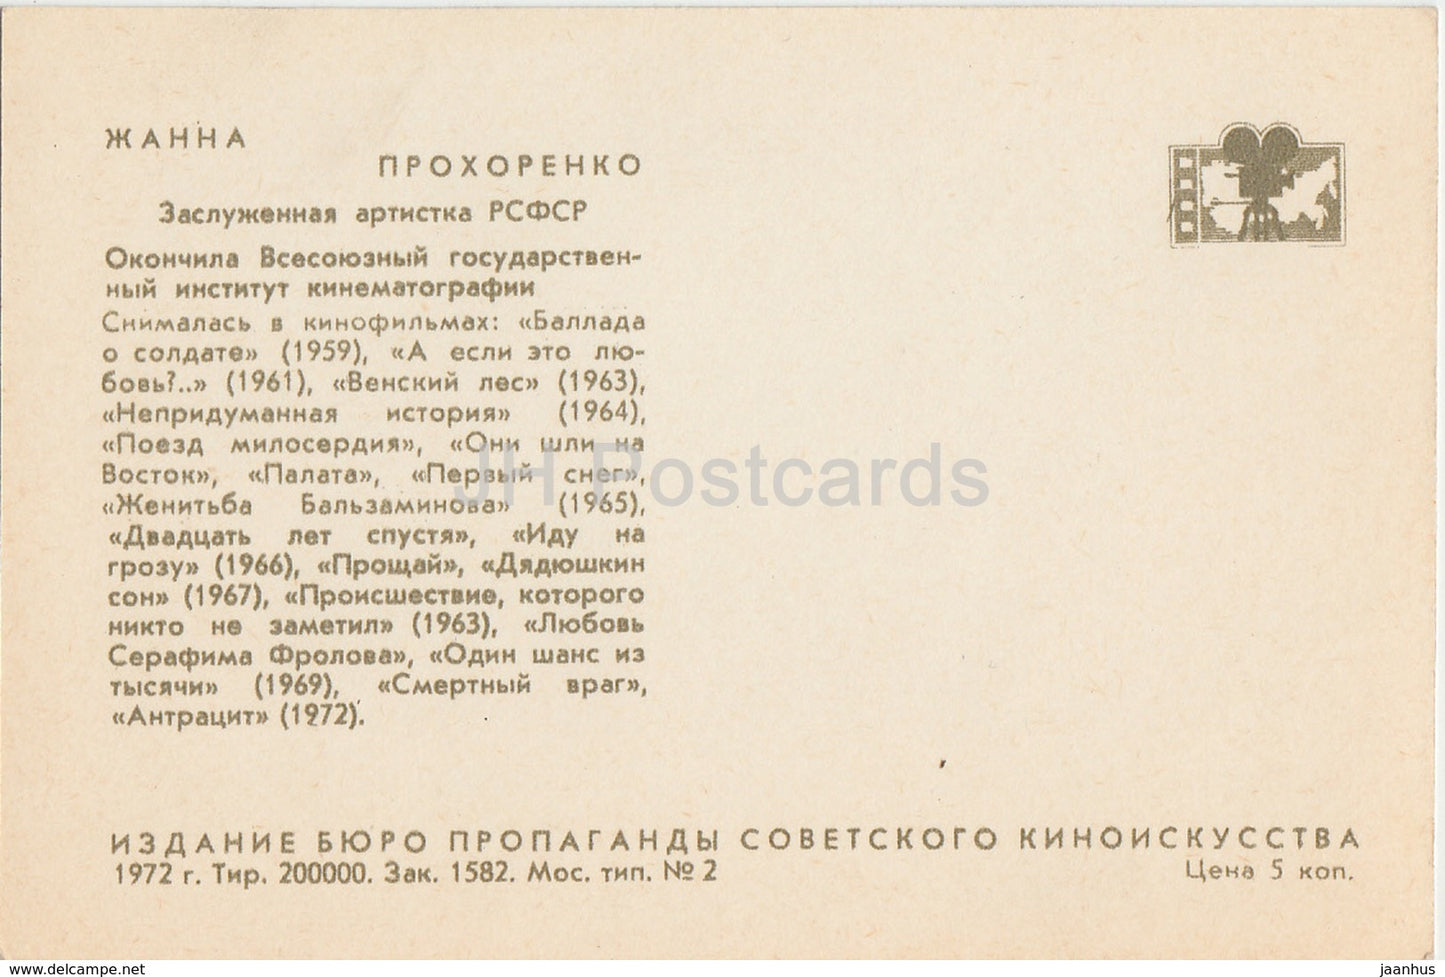 Zhanna Prokhorenko - movie actress - theatre - 1972 - Russia USSR - unused - JH Postcards